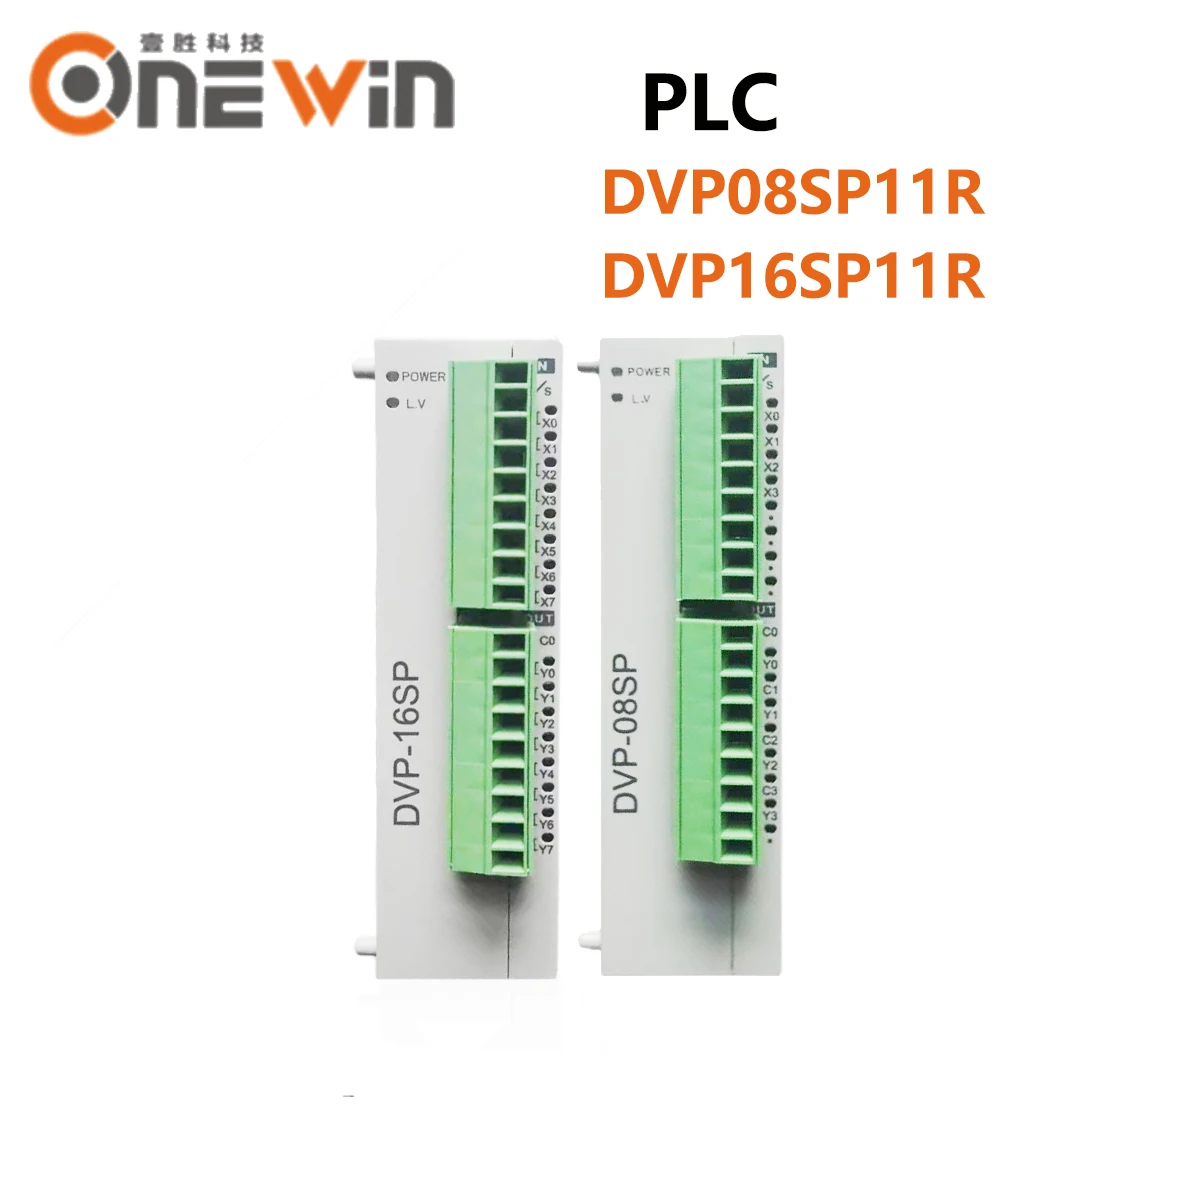 

DVP08SP11R DVP16SP11R Delta PLC Brand New Original 24VDC relay output module DVP-SLIM series